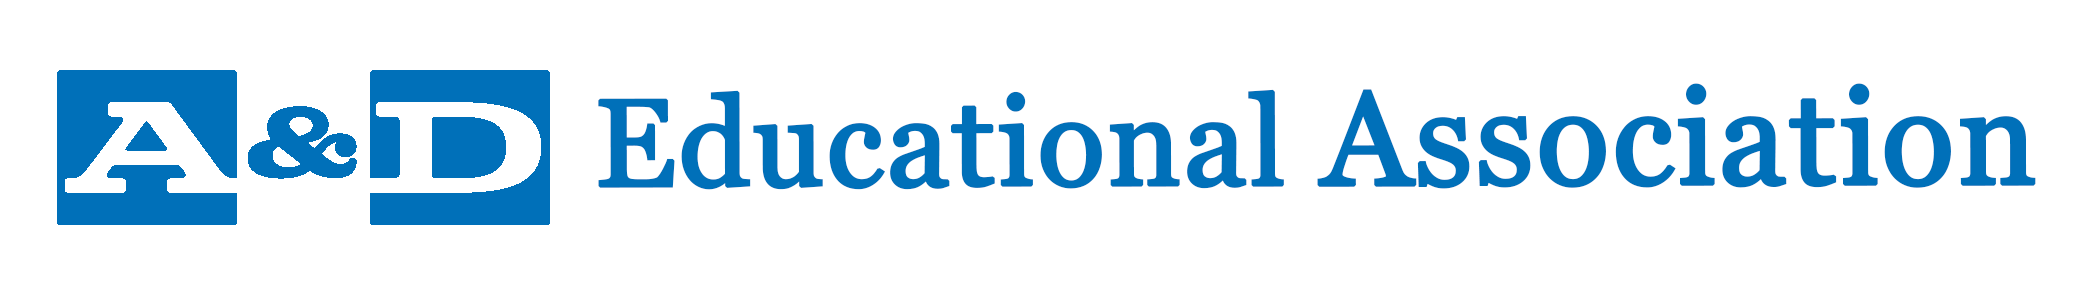 A&d Educational Services logo